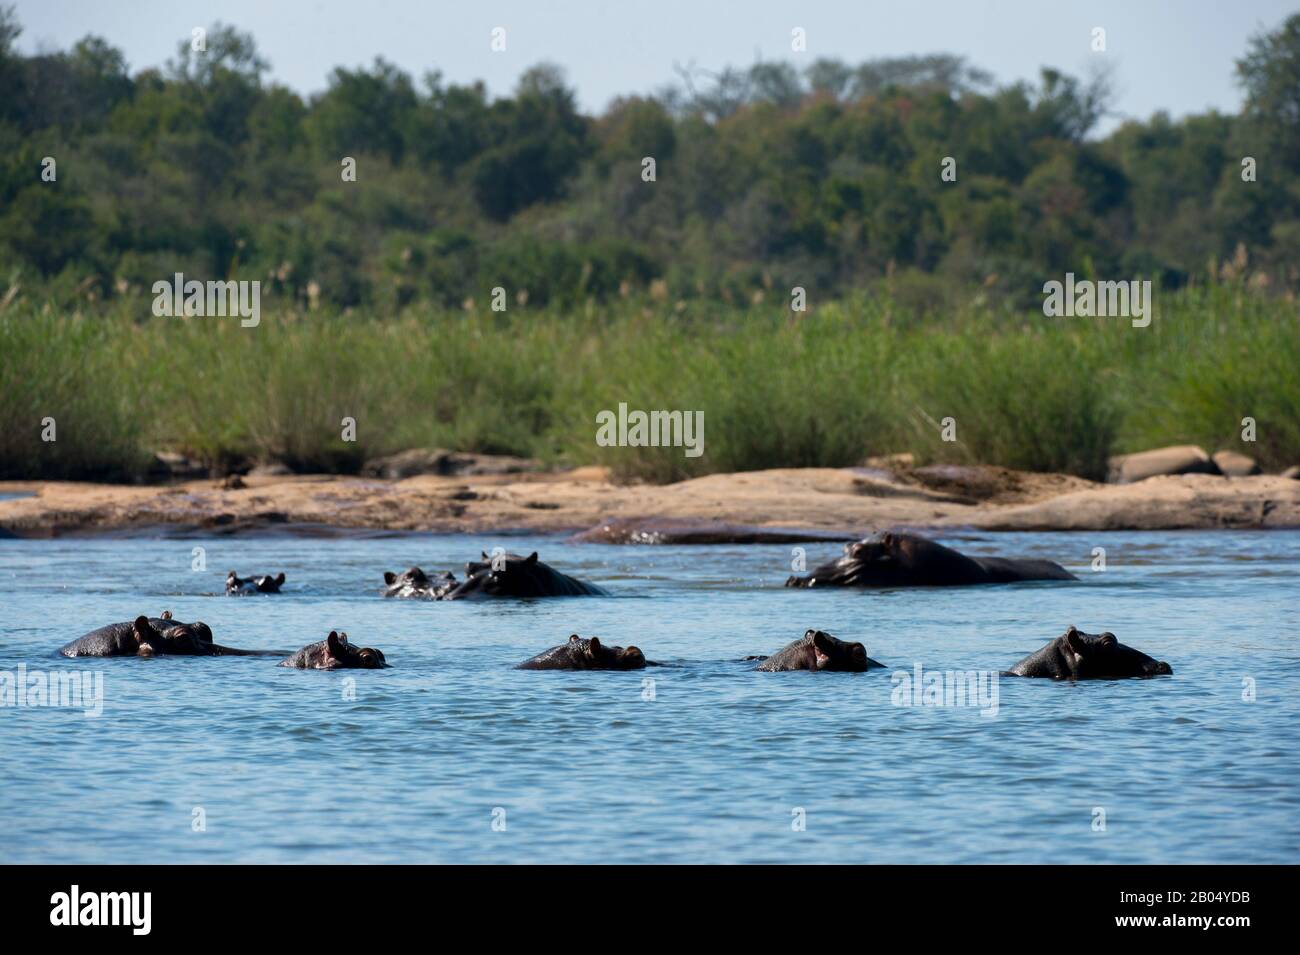 Il fiume Sabie con ippopotami nella Riserva di Sabbie Sands adiacente al Parco Nazionale Kruger in Sud Africa. Foto Stock